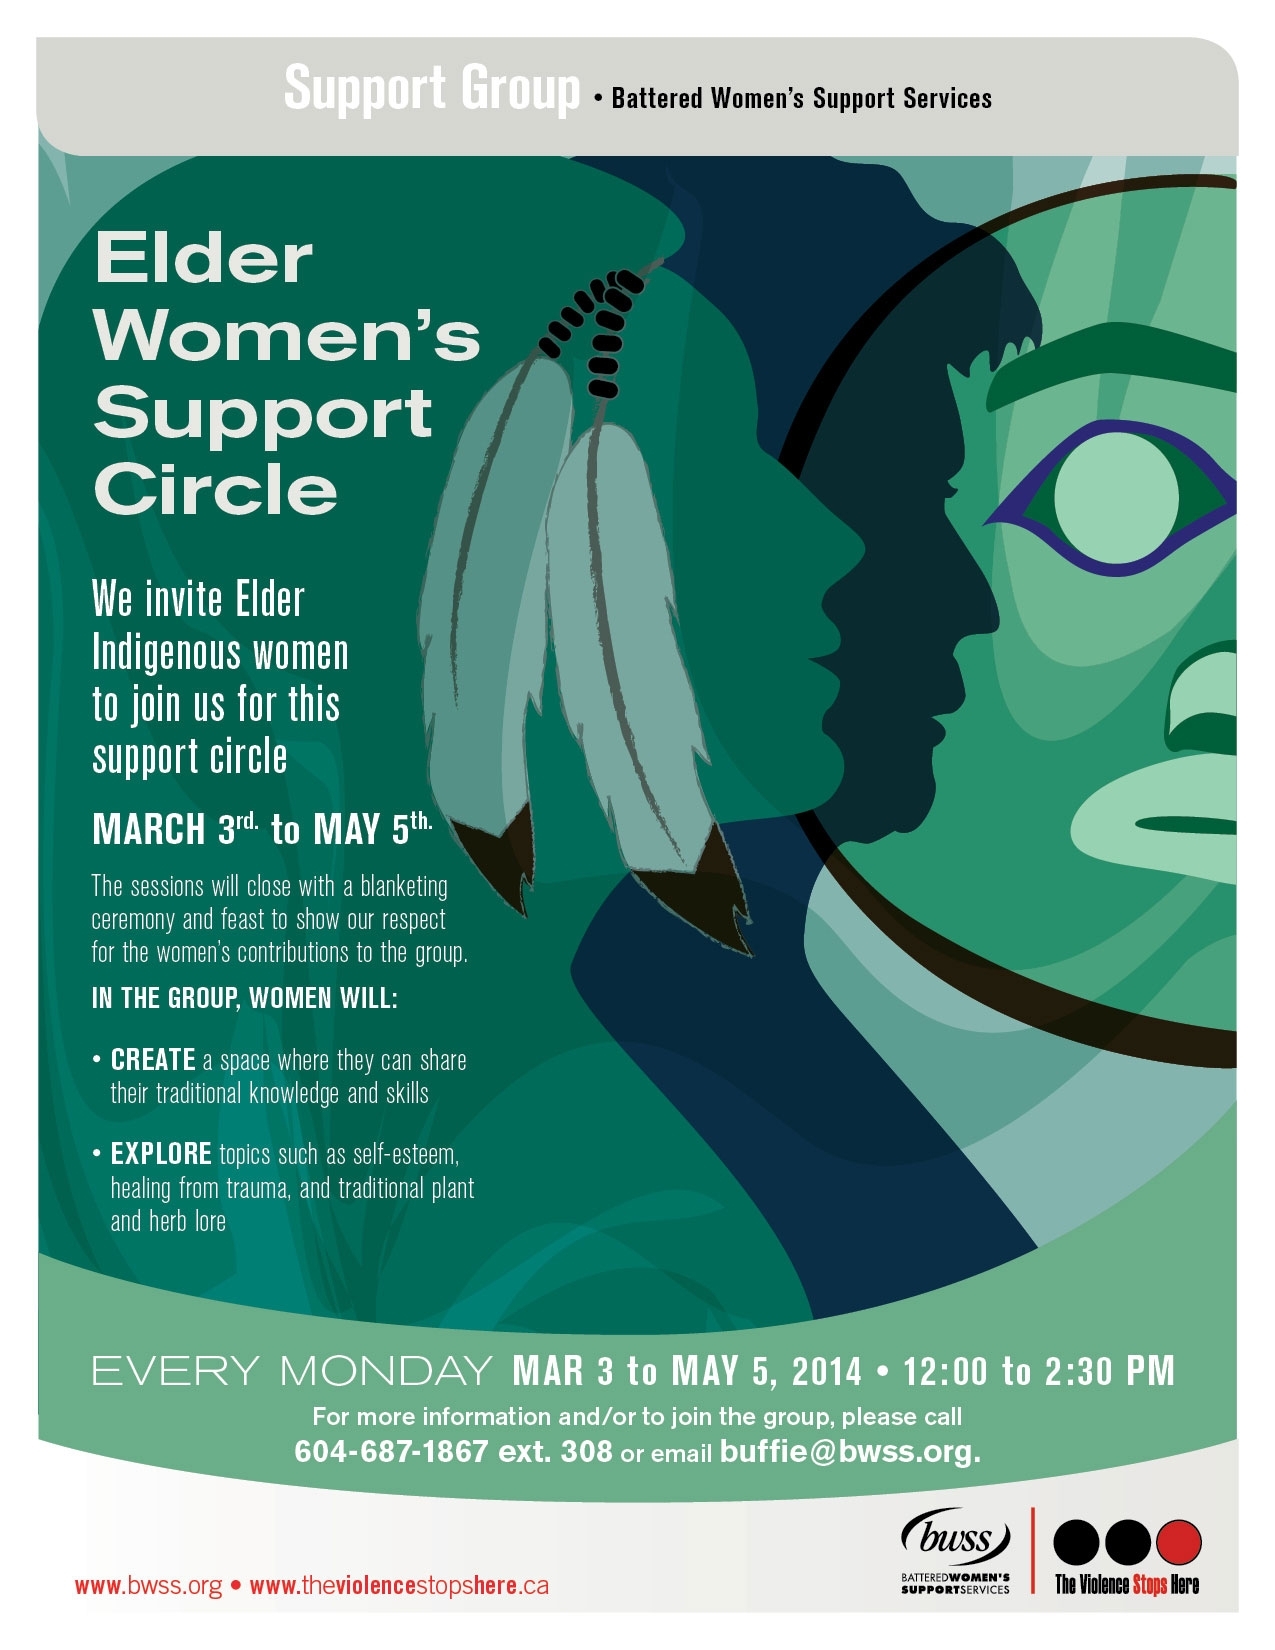 Elder Women’s Support Circle - BWSS